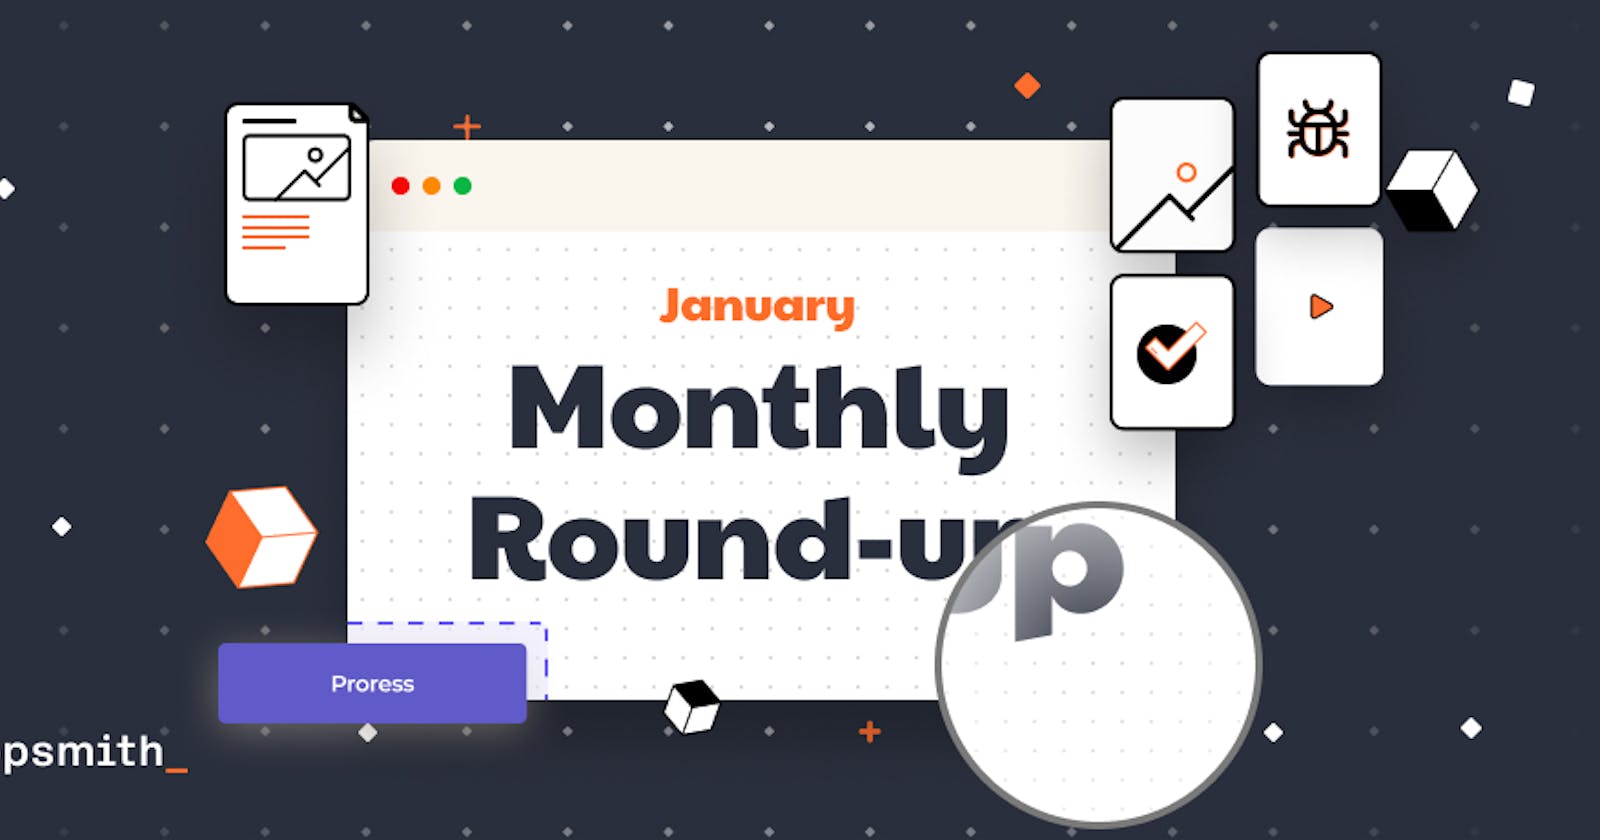 January Roundup: New Drag and Drop Experience, Progress Bar and Input Widgets!